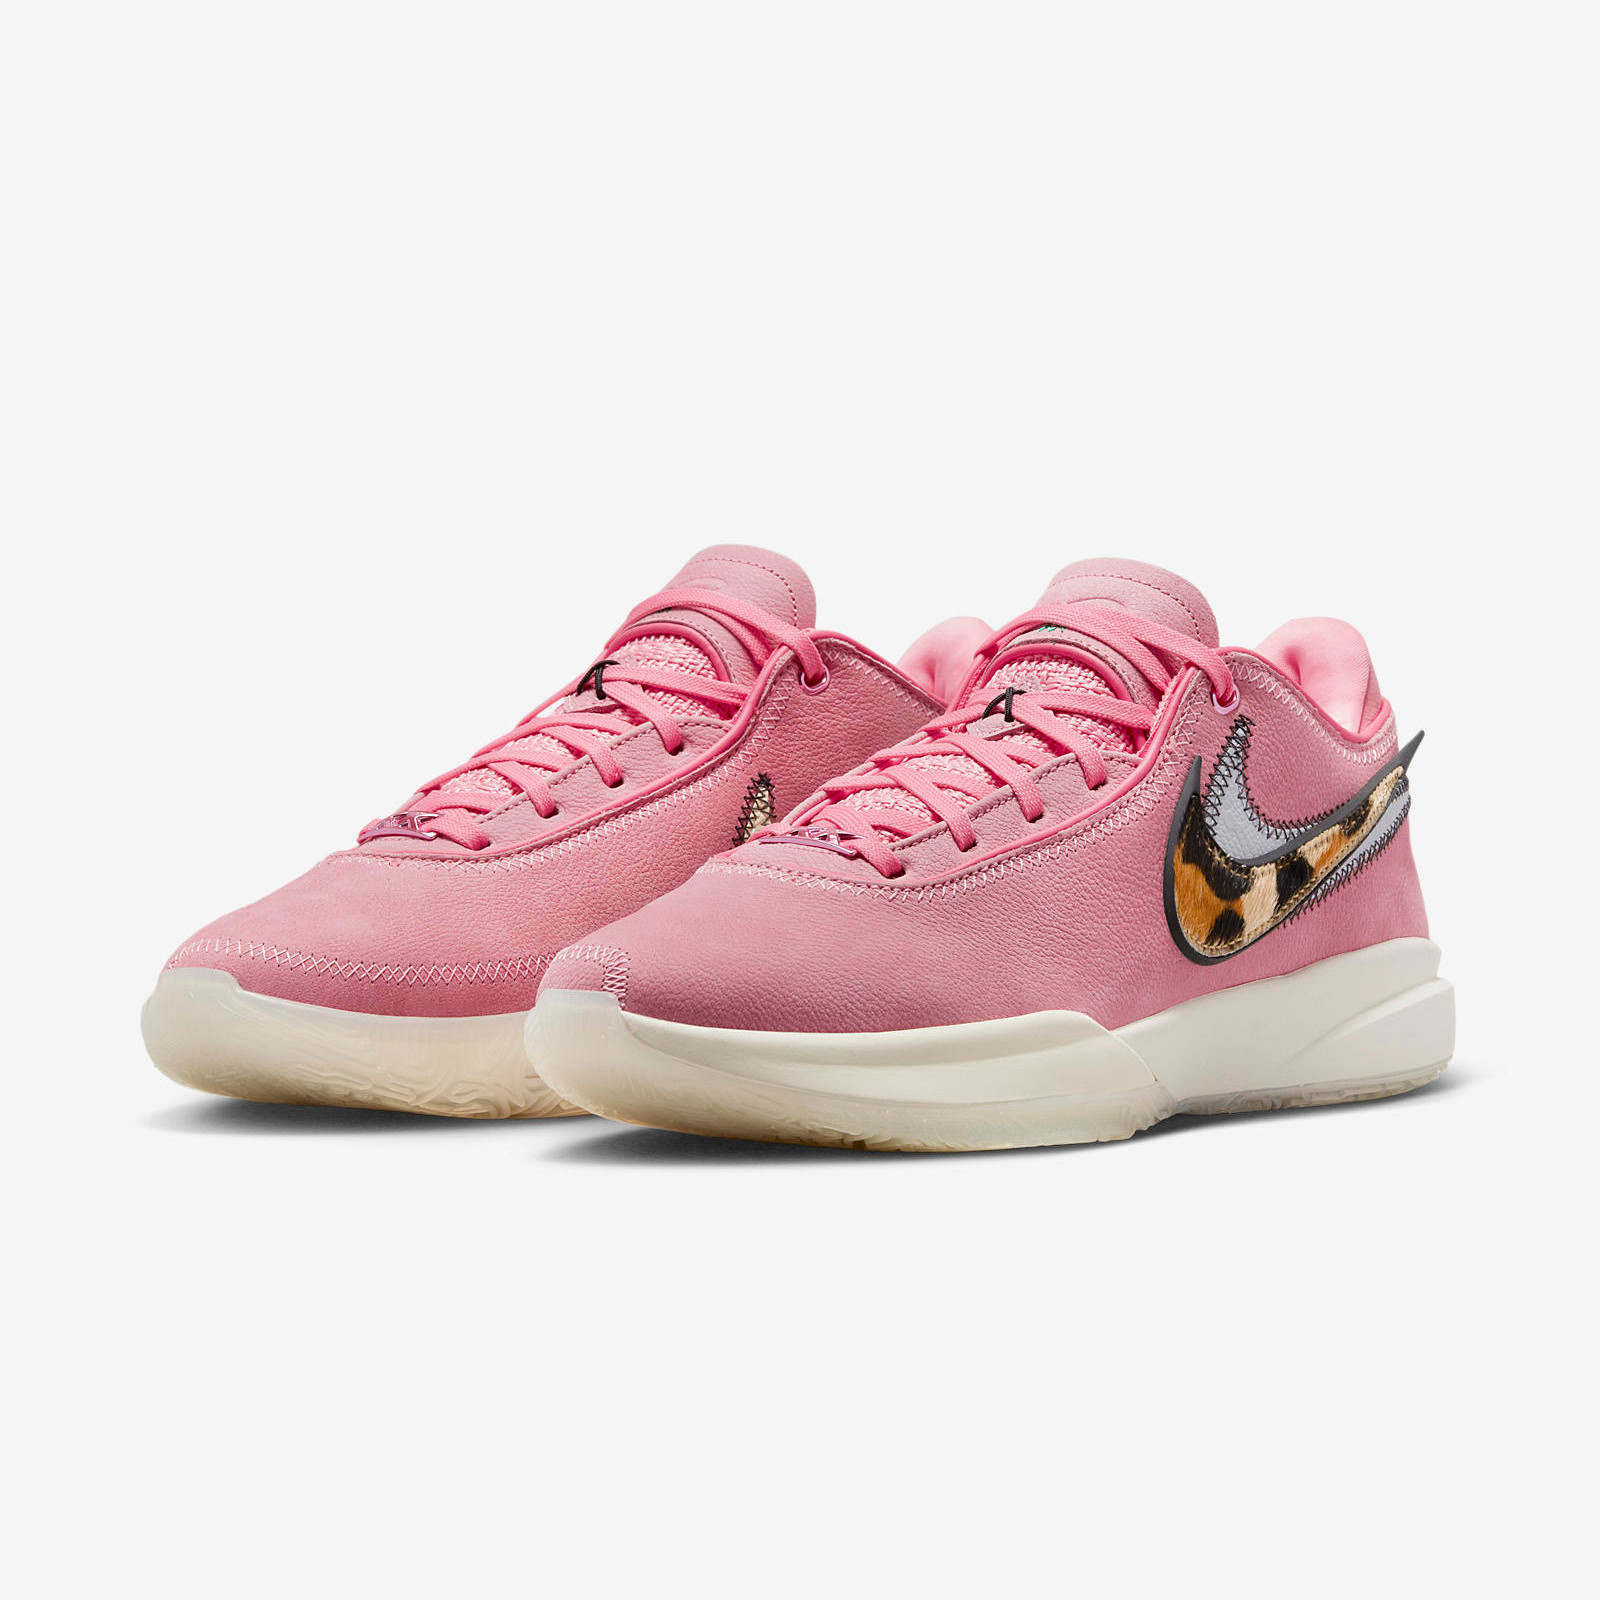 Nike LeBron XX
« Pink Diamond »